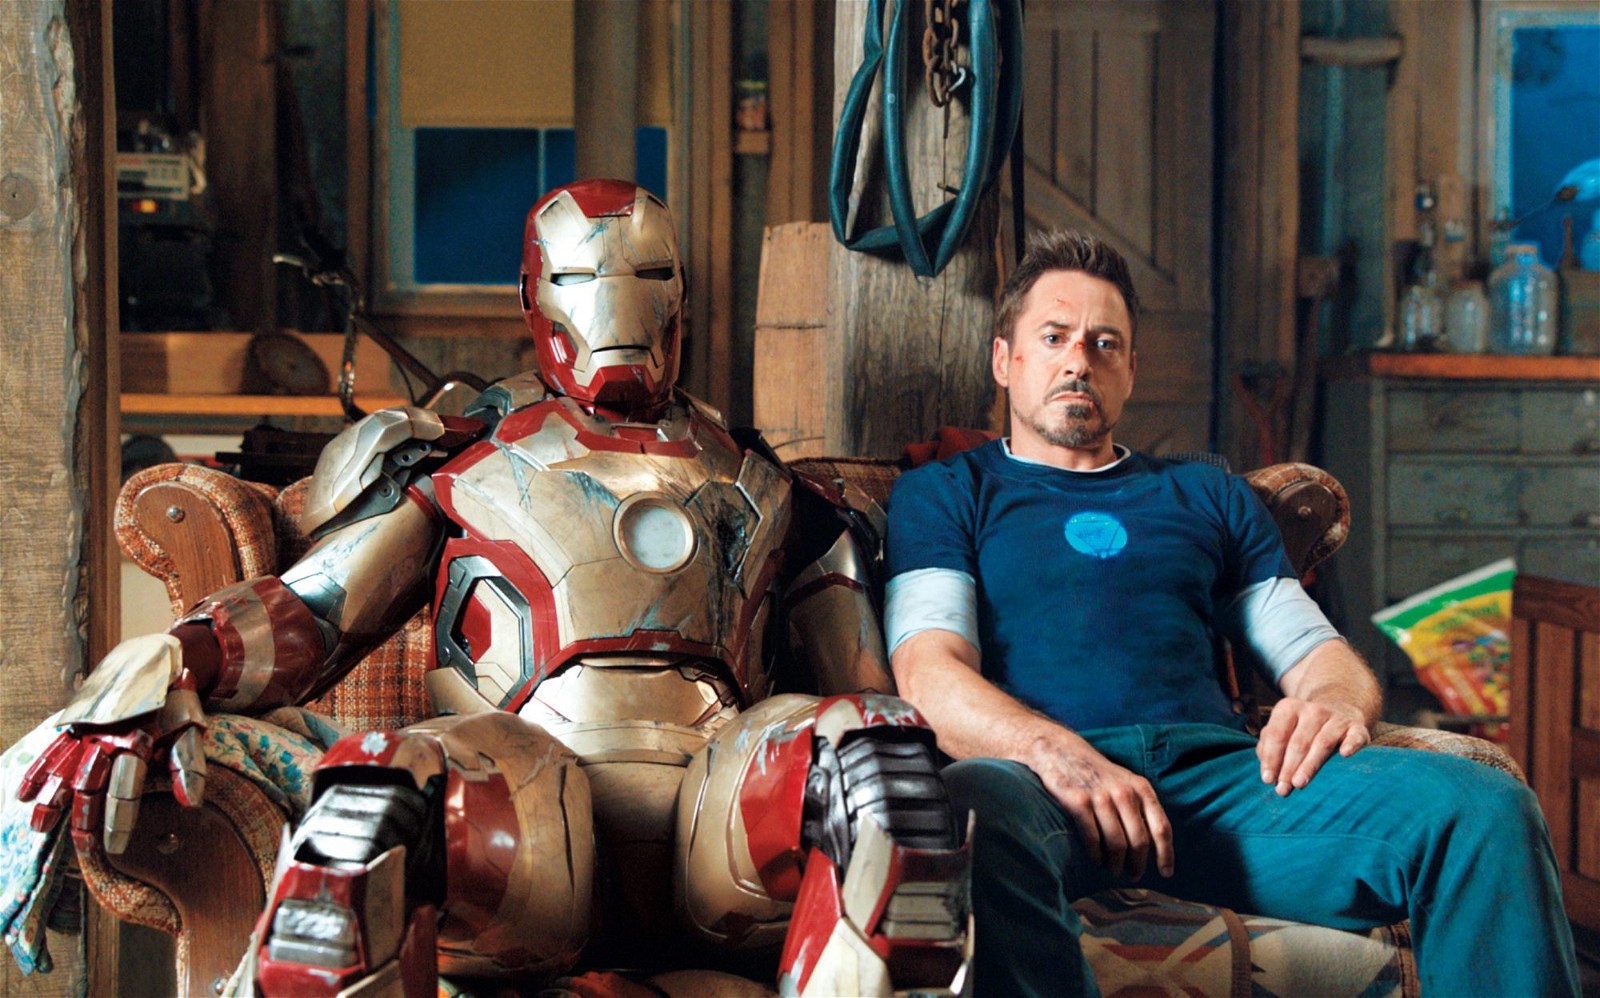 Robert Downey Jr. as Tony Stark / Iron Man